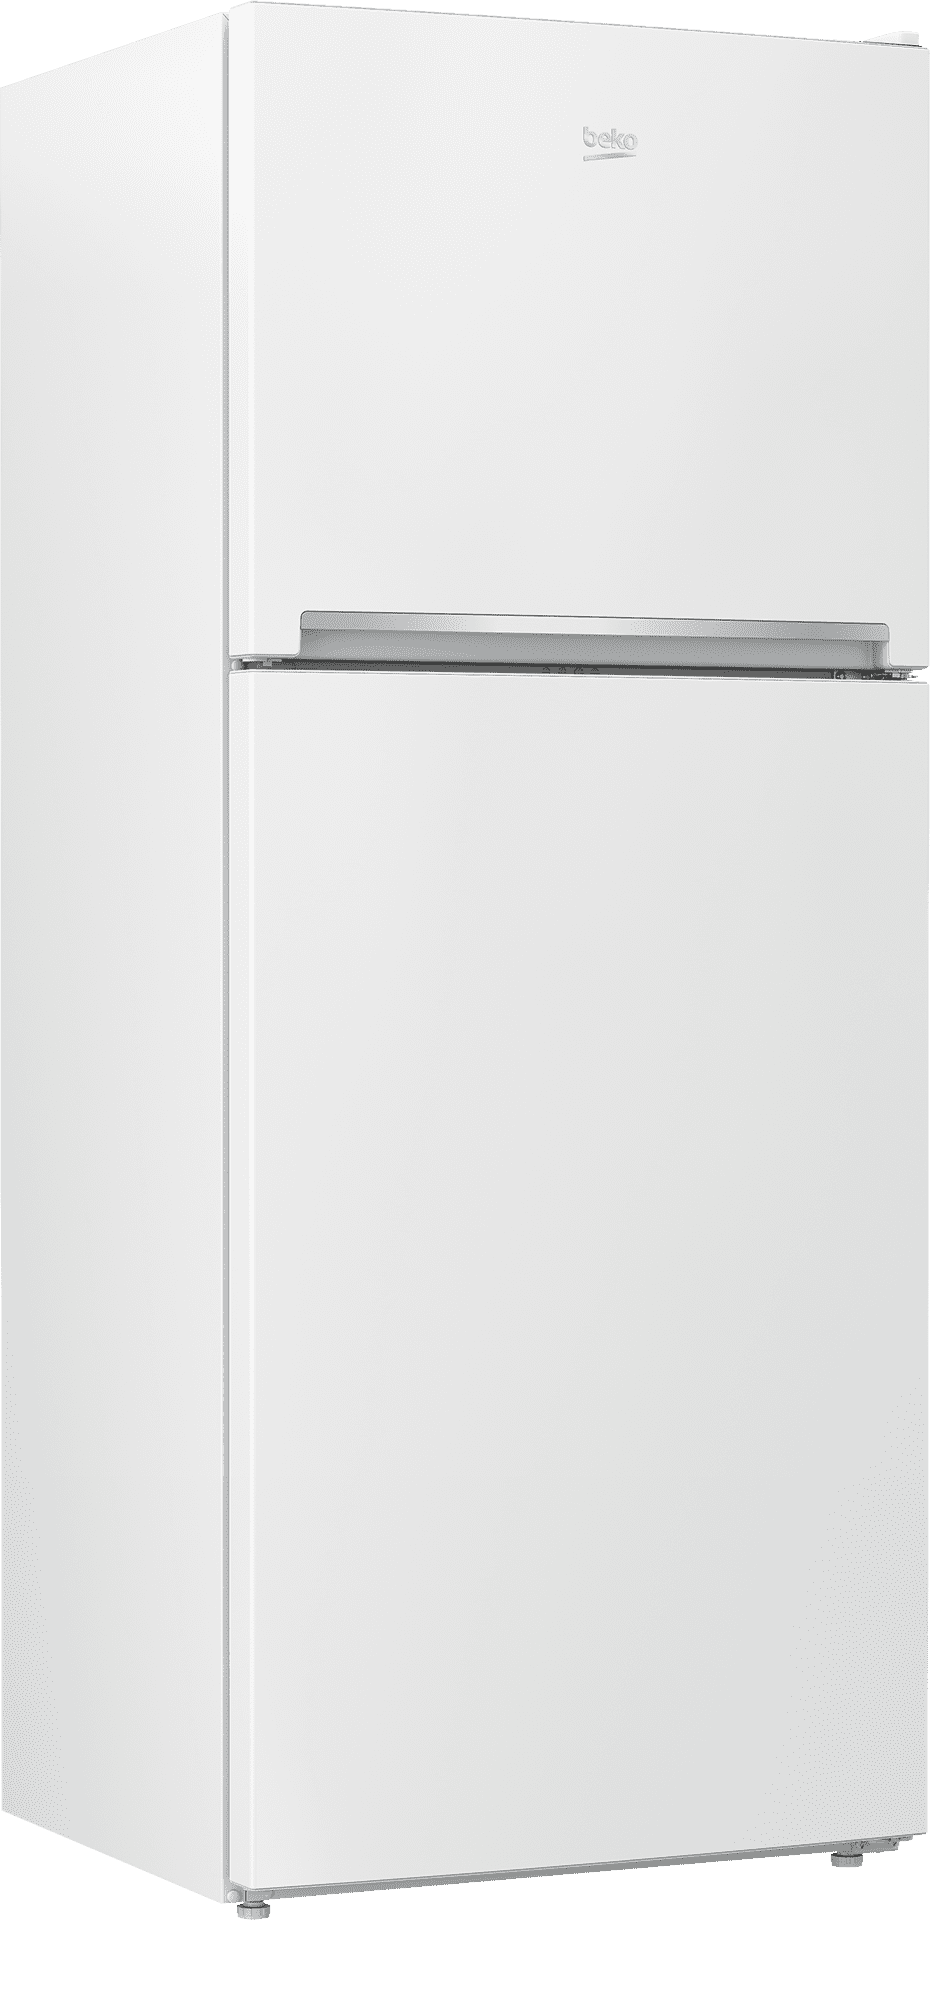 Beko 28 Freezer Top White Refrigerator with Auto Ice Maker WHITE  BFTF2716WHIM